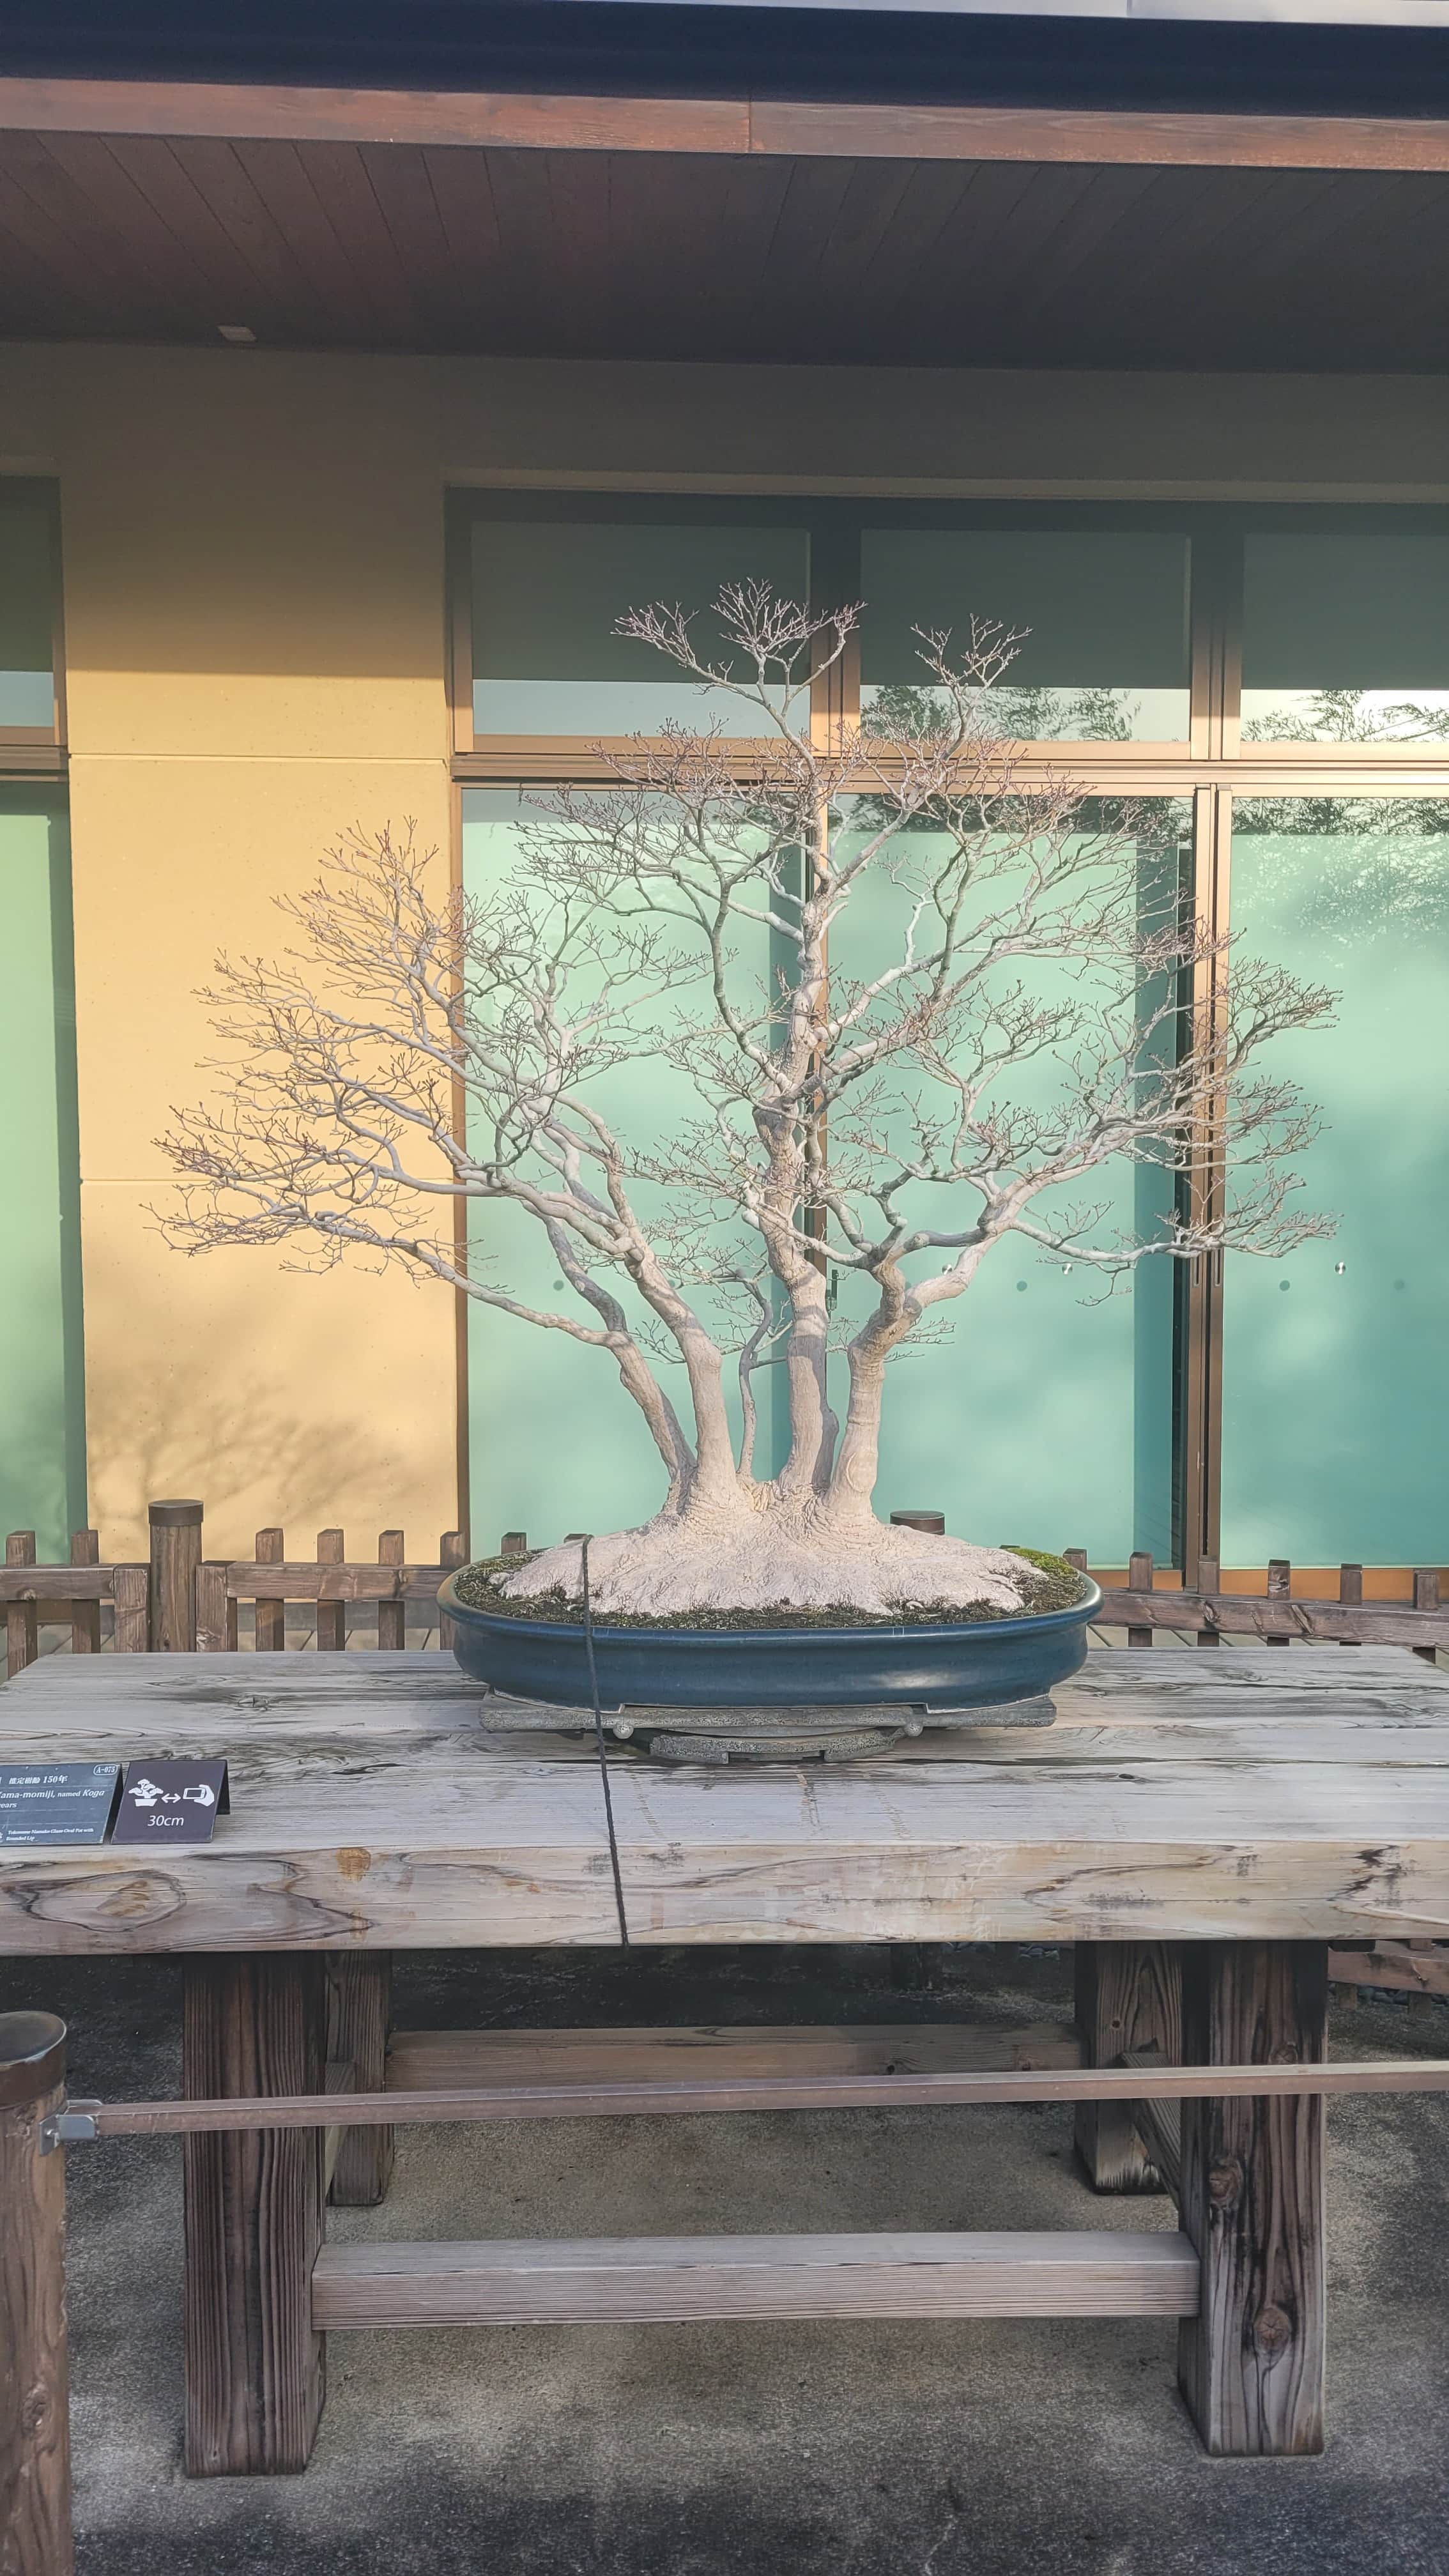 A maple bonsai tree from omiya museum in Japan